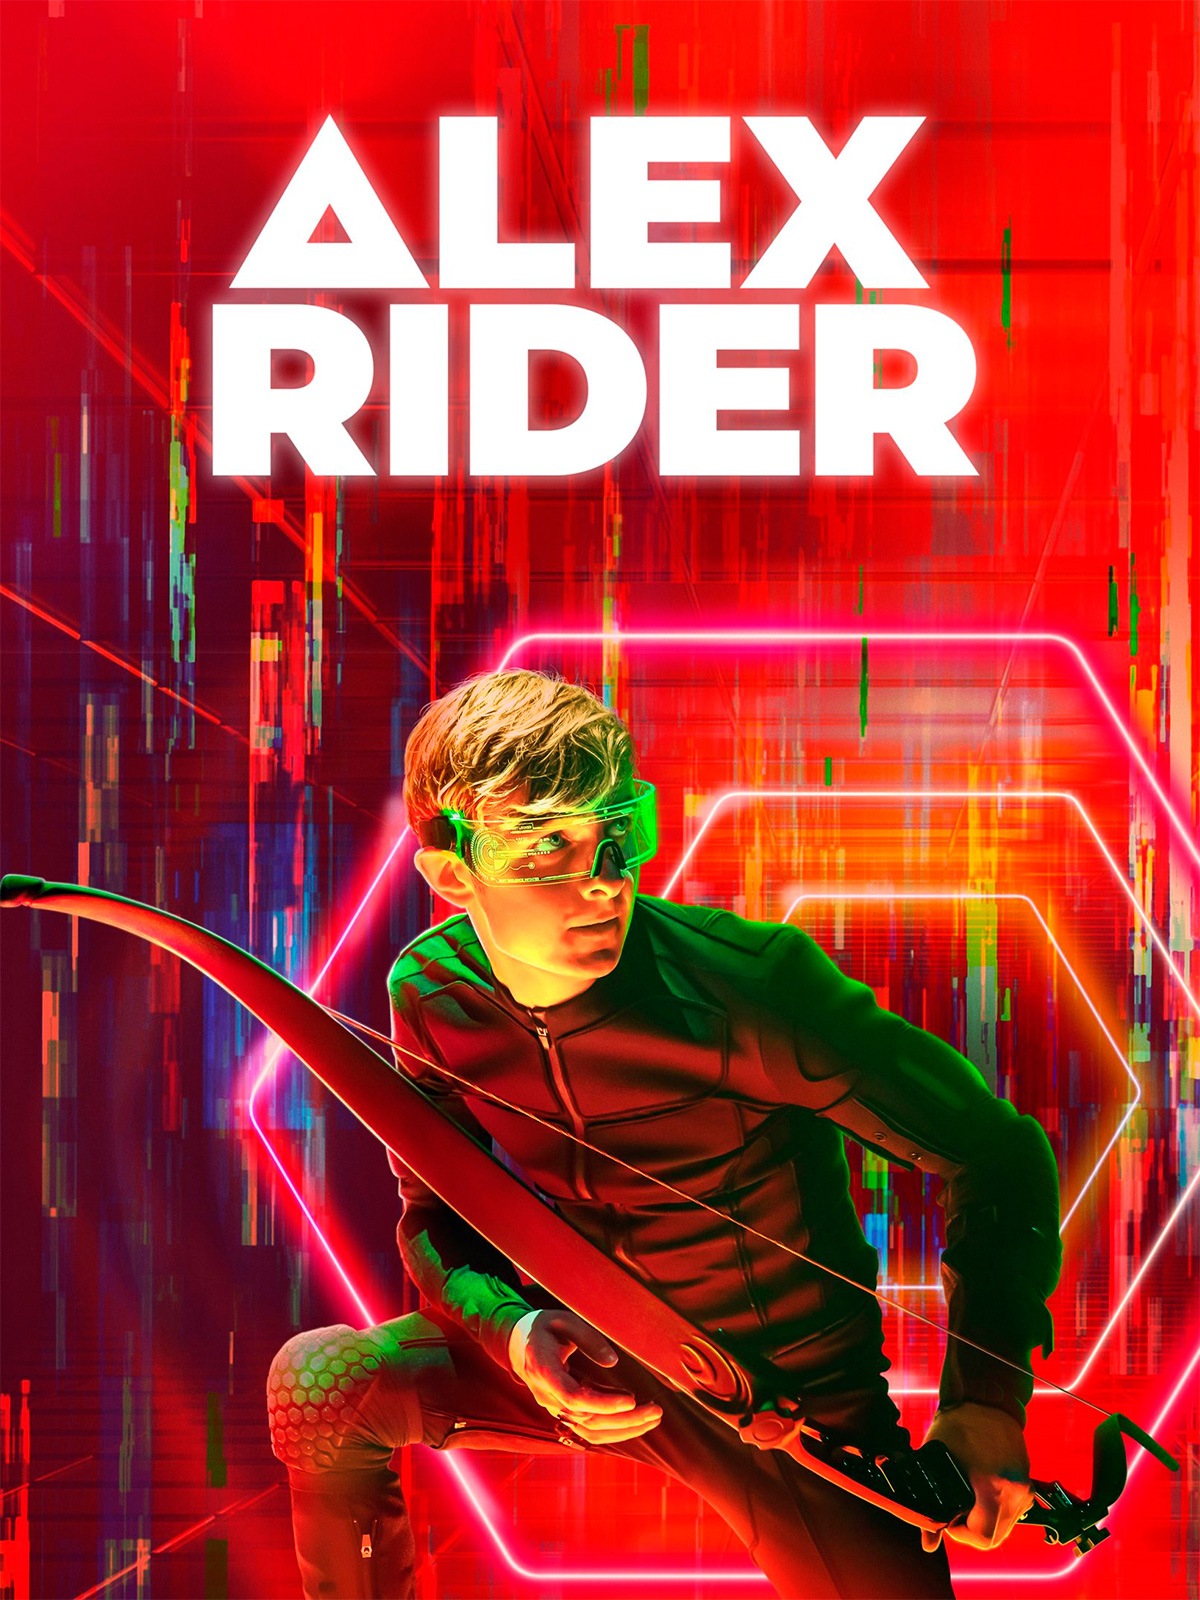 Alex rider crossover fanfiction